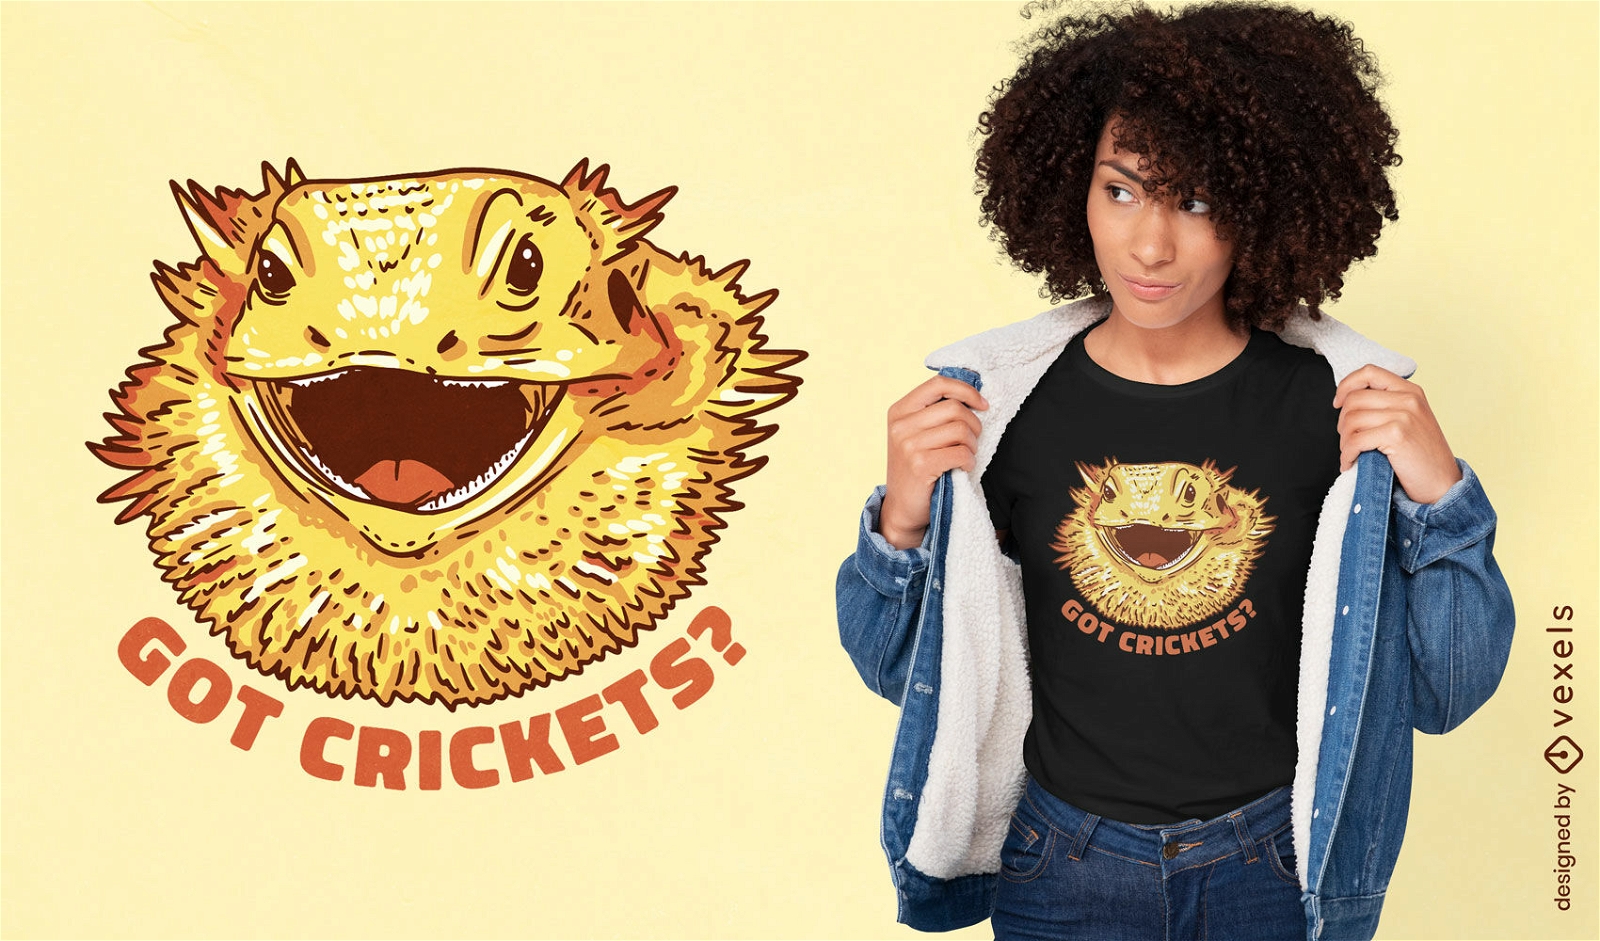 Funny bearded dragon cricket t-shirt design